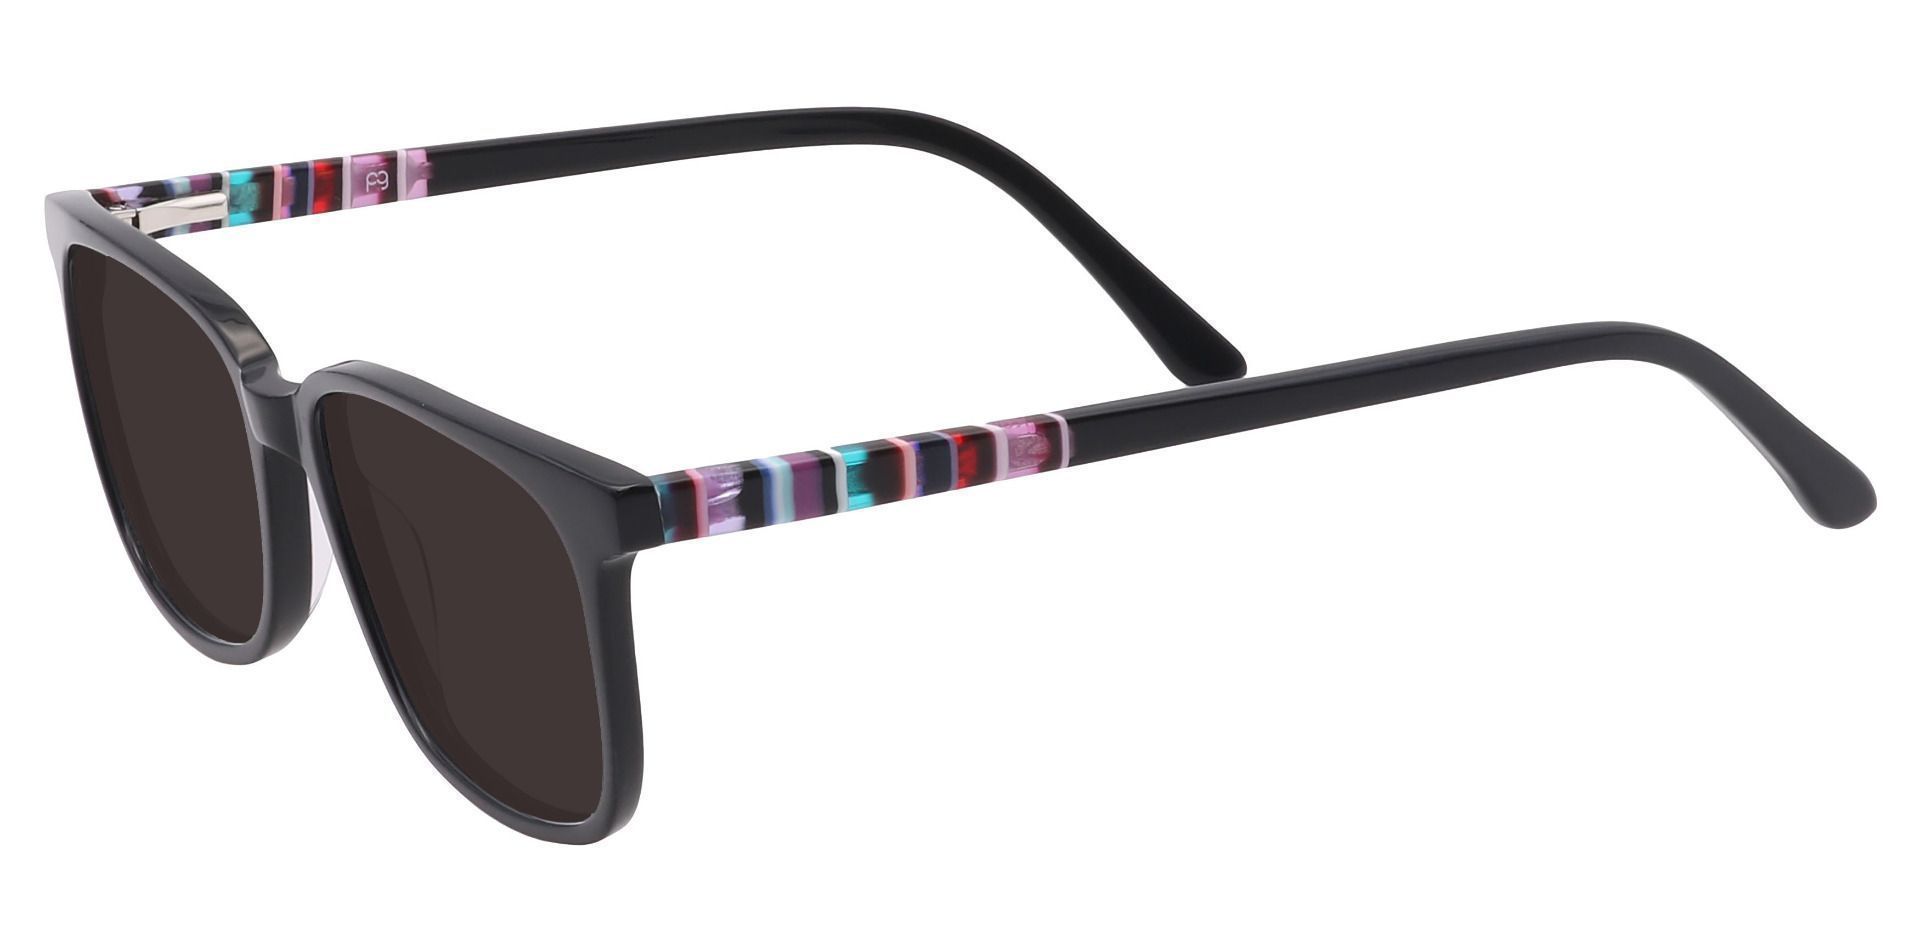 Fern Square Progressive Sunglasses - Black Frame With Gray Lenses